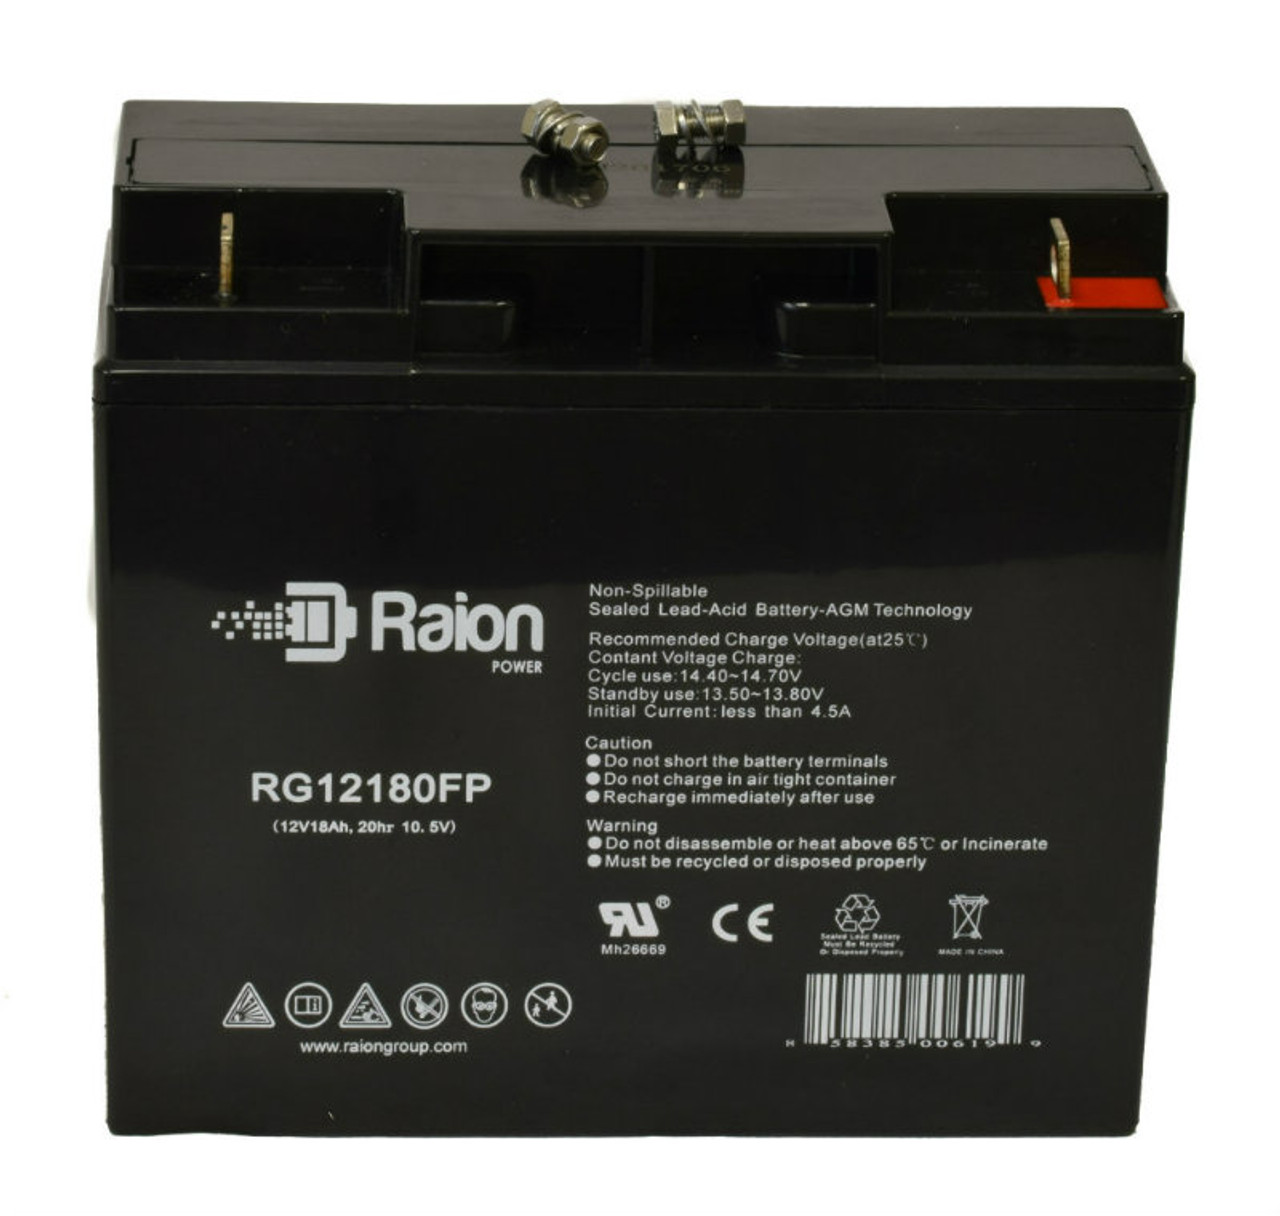 Raion Power RG12180FP 12V 18Ah Lead Acid Battery for Consent Battery GS1218